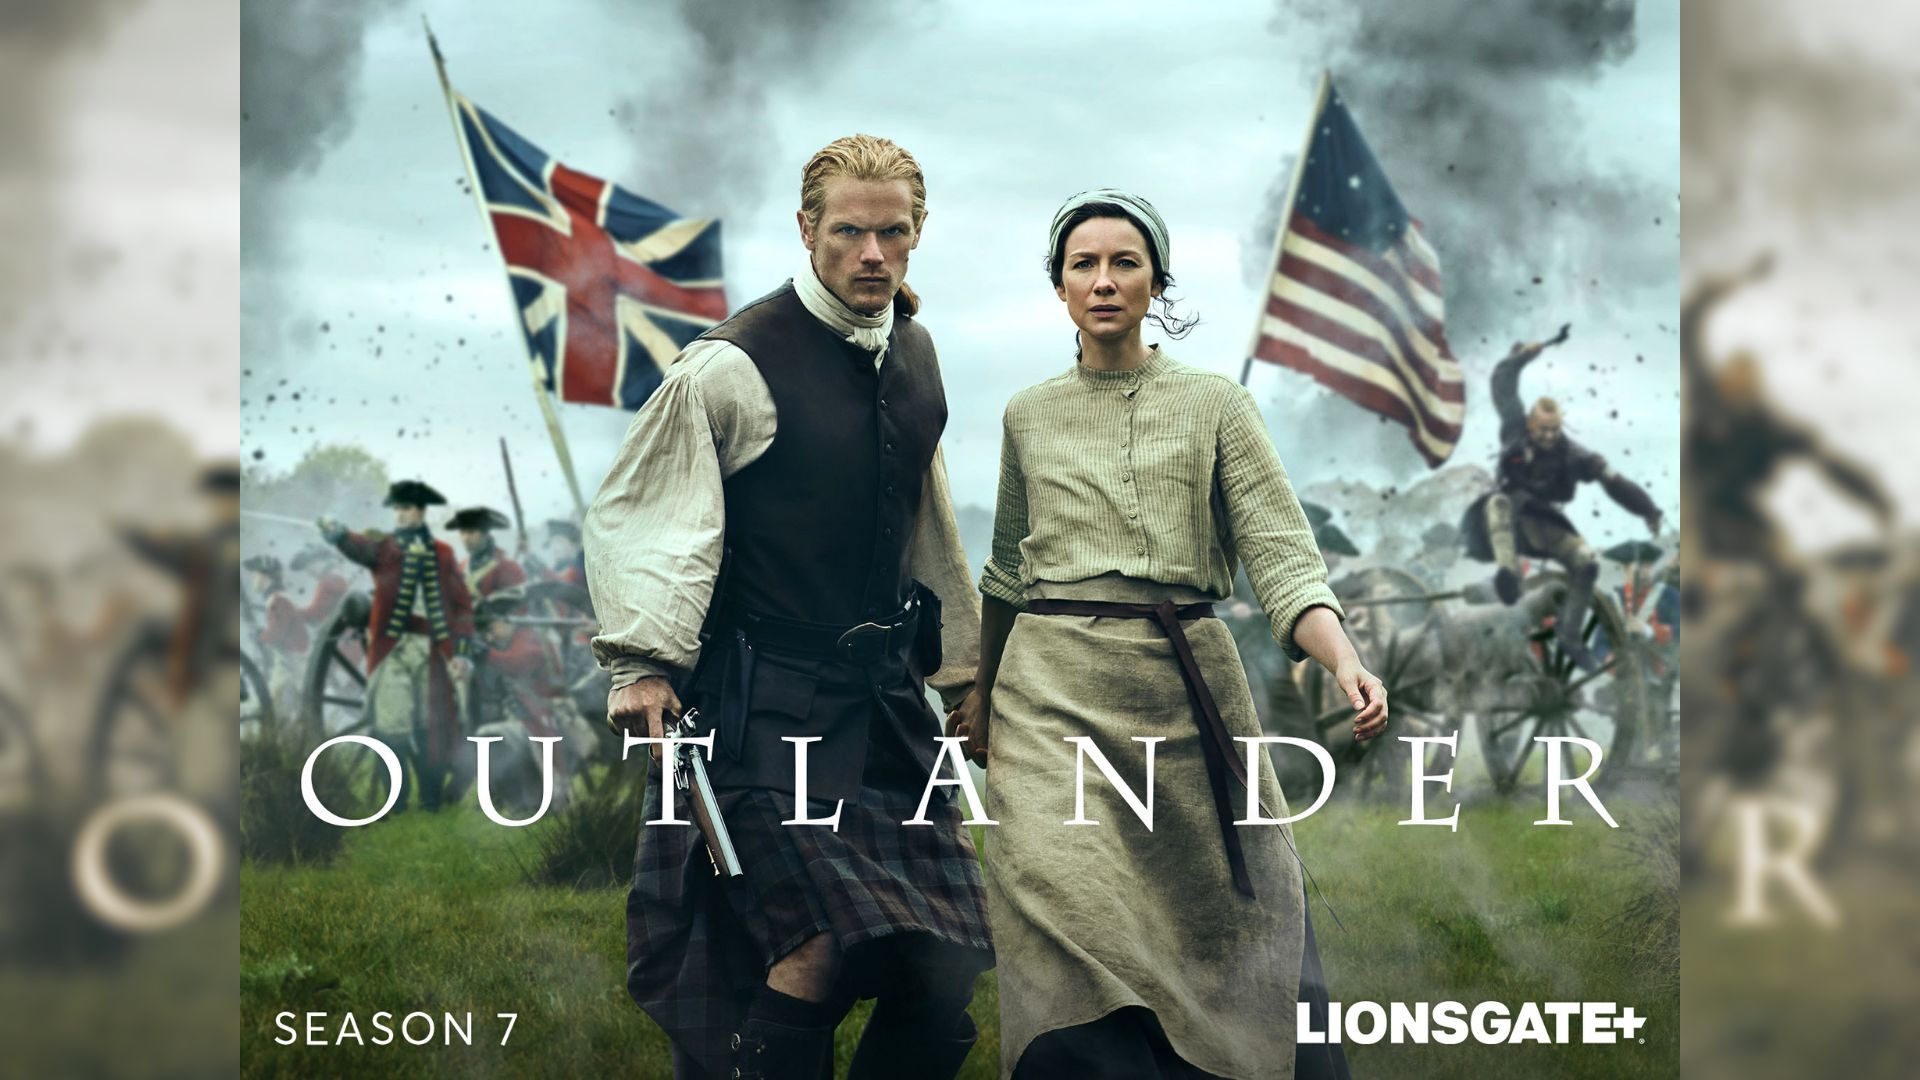 ‘Outlander’ Season 7 Part 2 Set to Premiere November 22: Fans Anticipate Thrilling Continuation